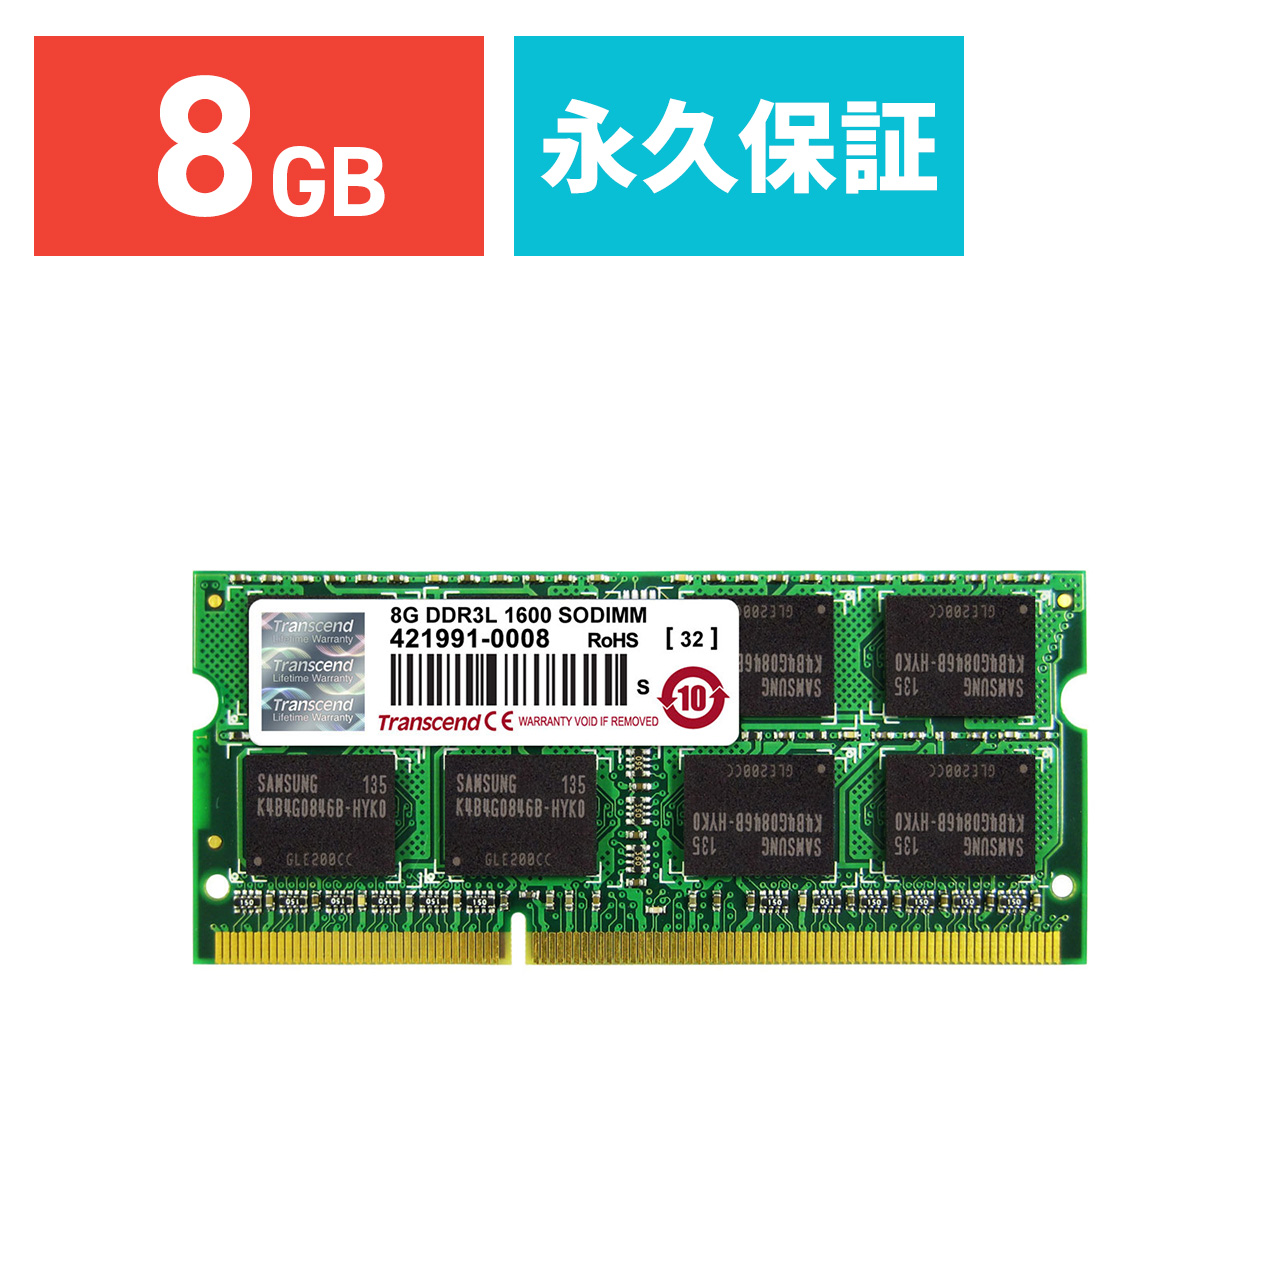 Amazon.co.jp: 2個セット USBフラッシュメモリ 32GB USB2.0 KIOXIA（旧東芝メモリー）TransMemory U202  Windows/Mac対応 [並行輸入品] : パソコン・周辺機器